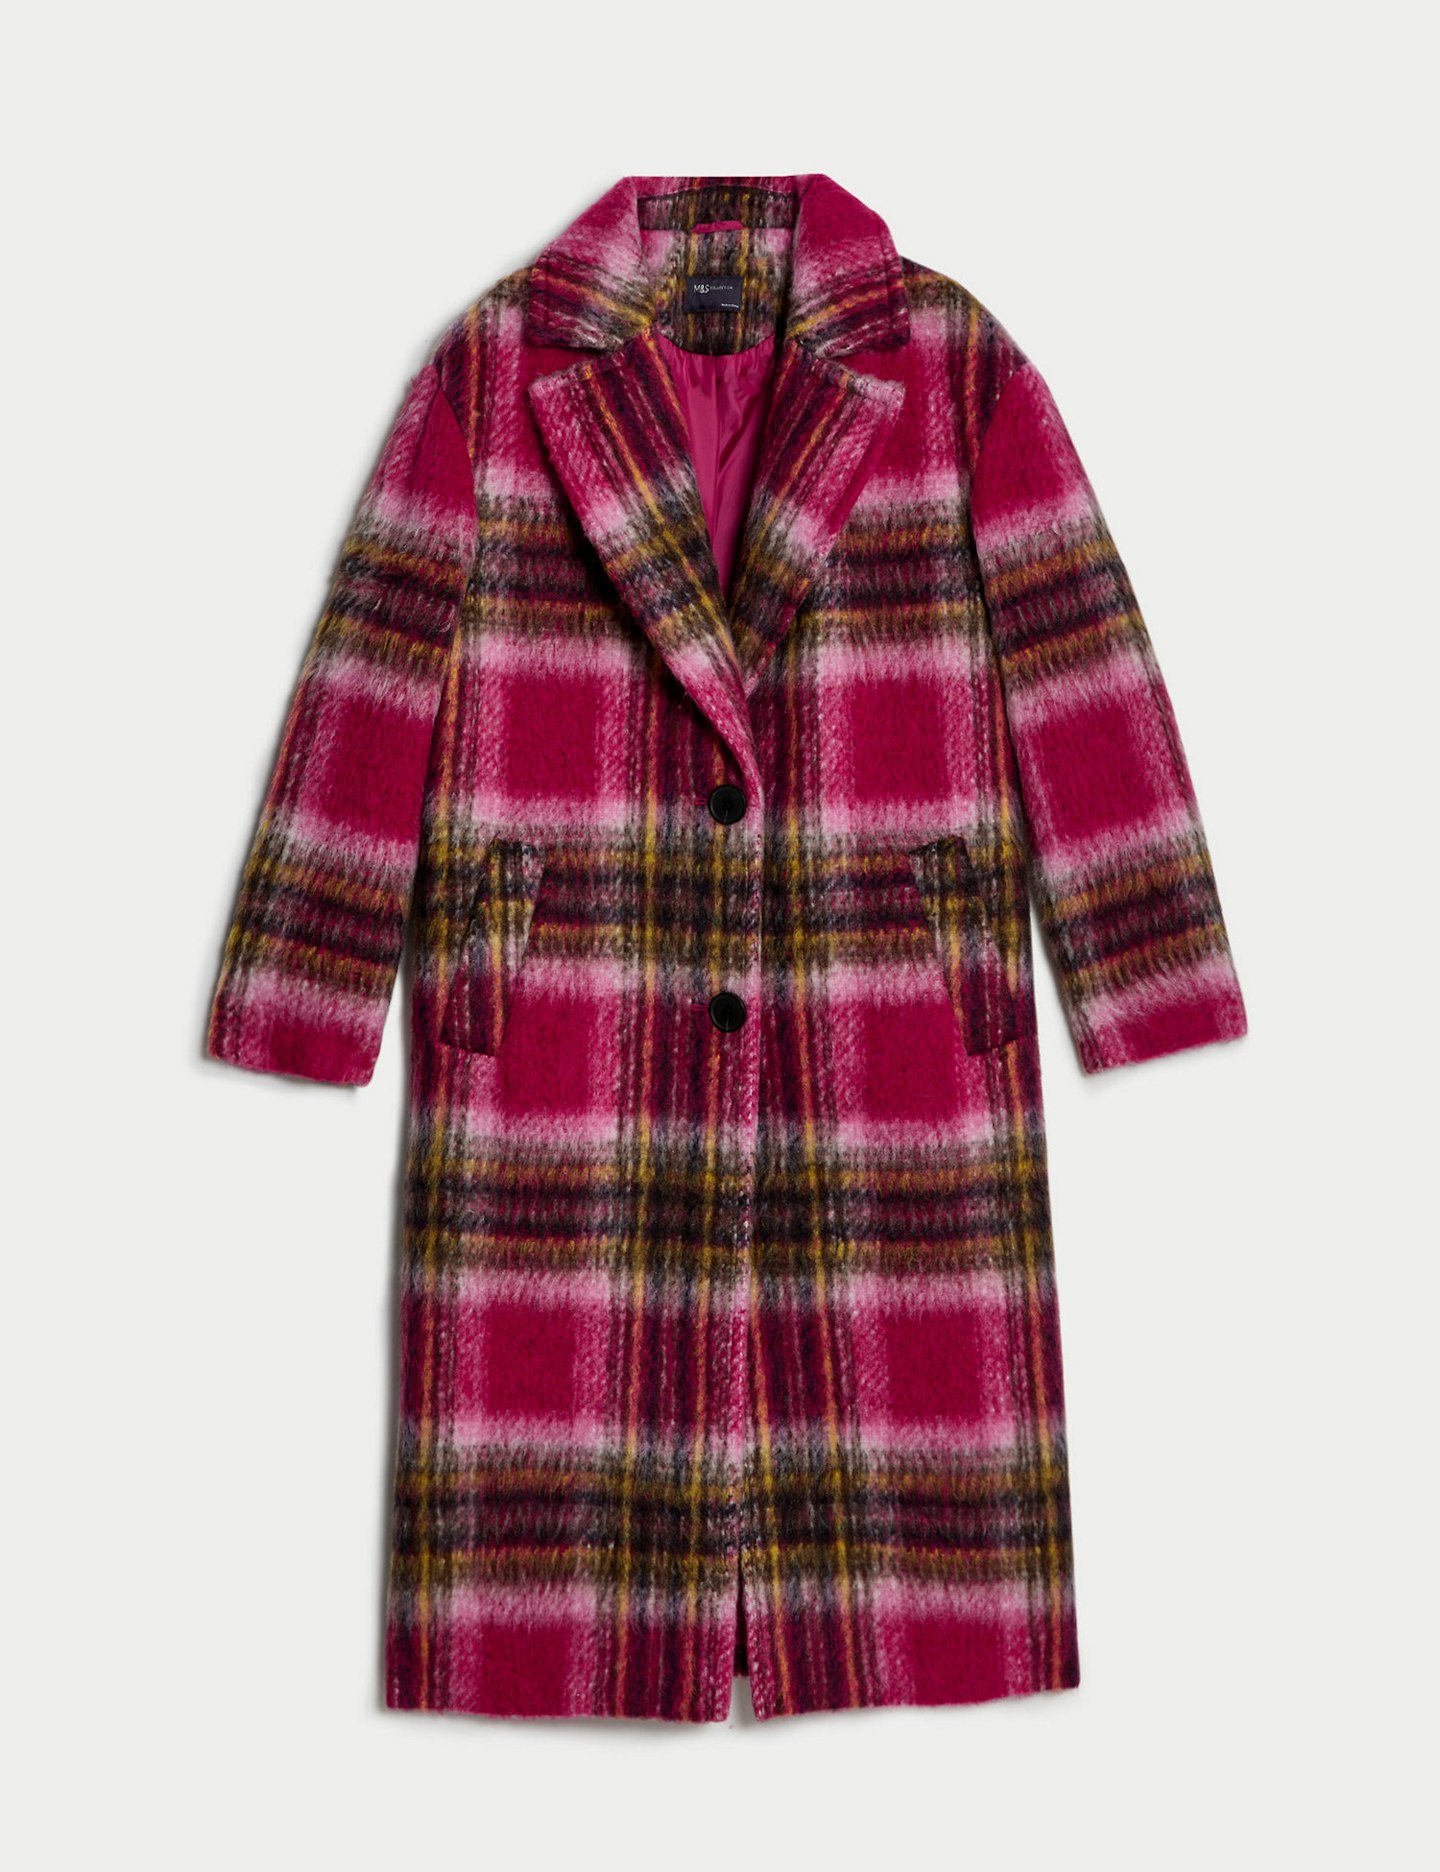 Sienna Miller M&S coat